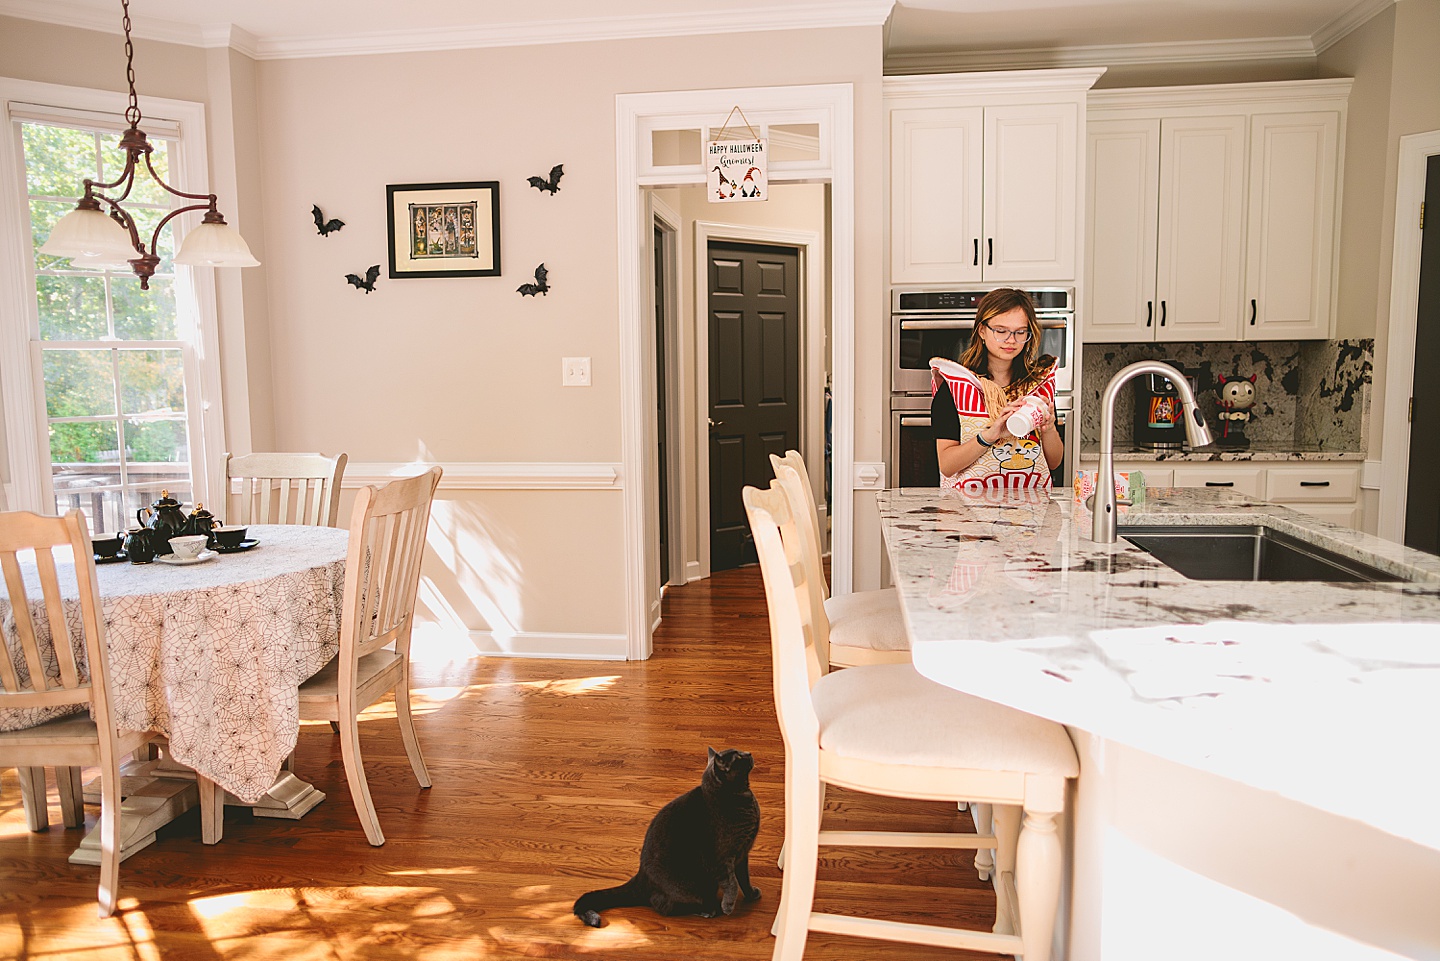 Girl prepares Ramen in kitchen while gray cat watches